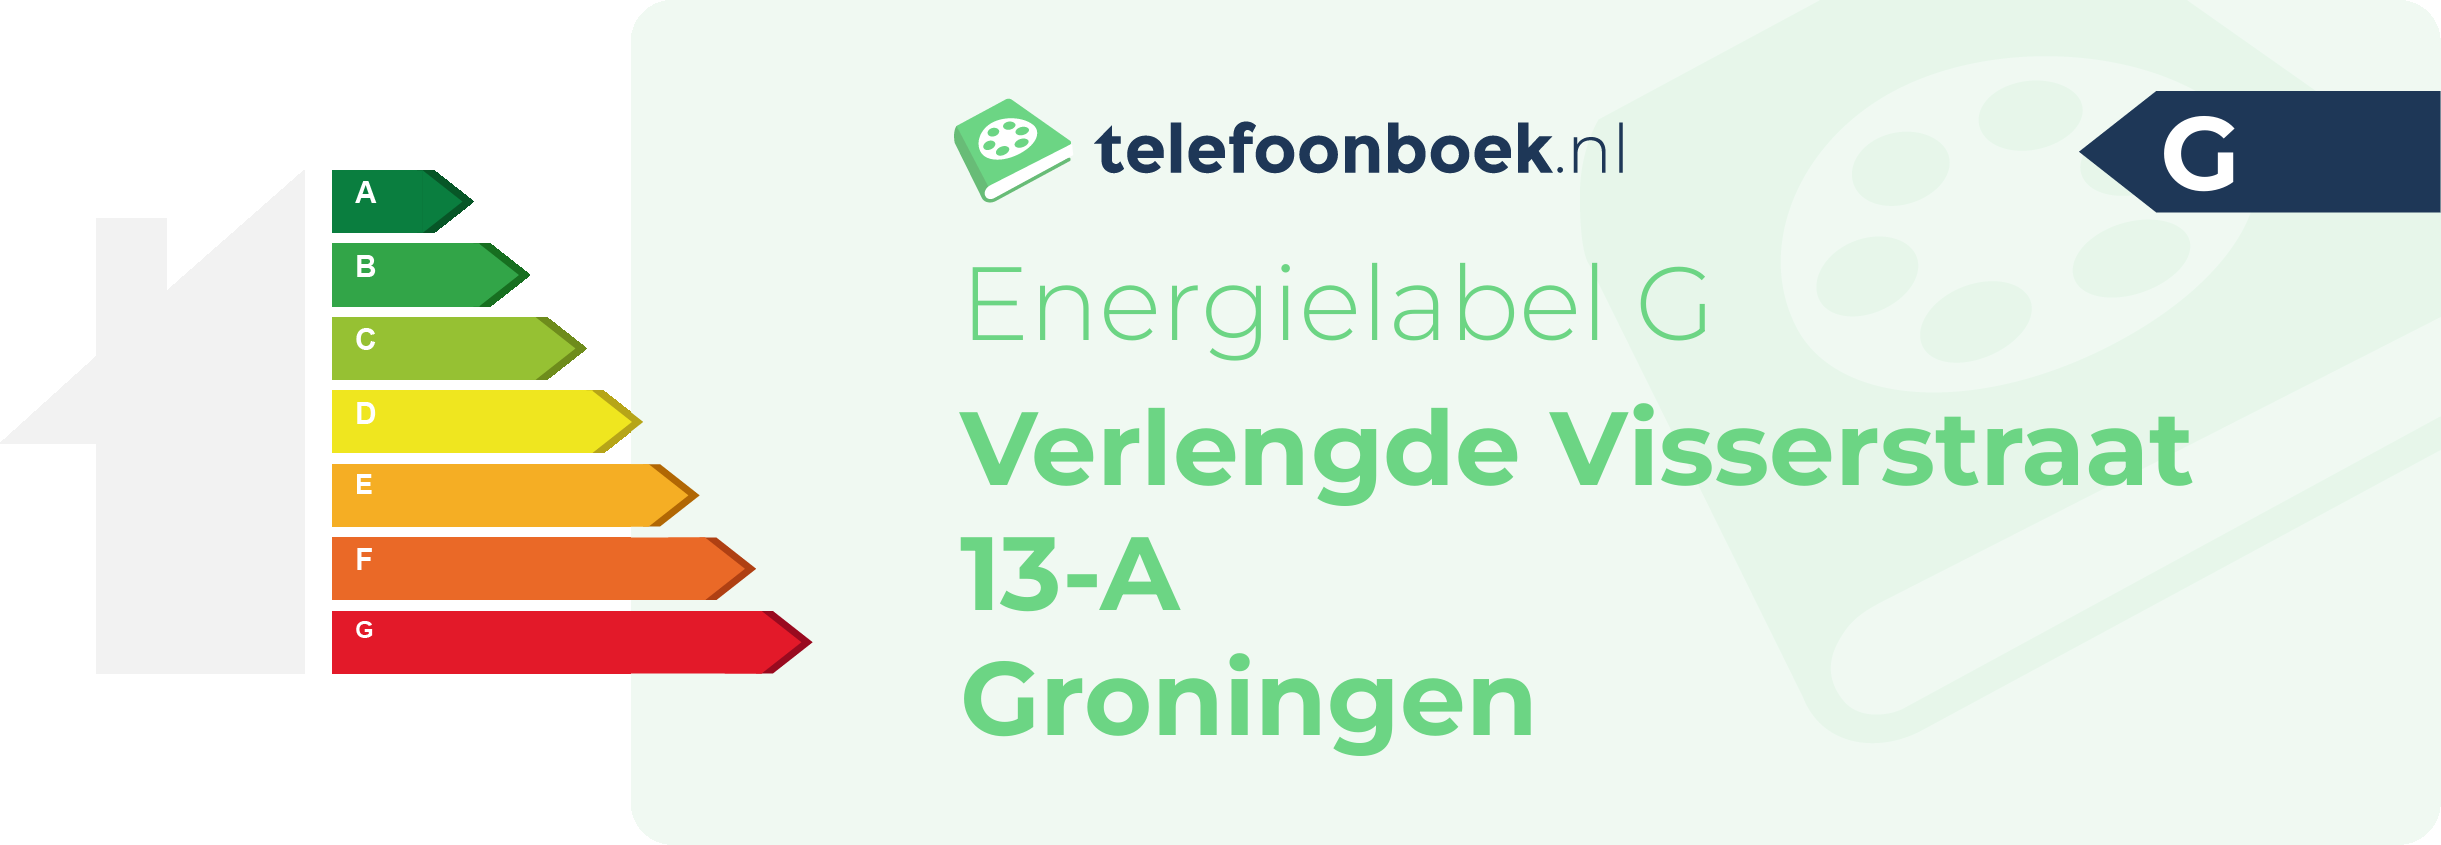 Energielabel Verlengde Visserstraat 13-A Groningen